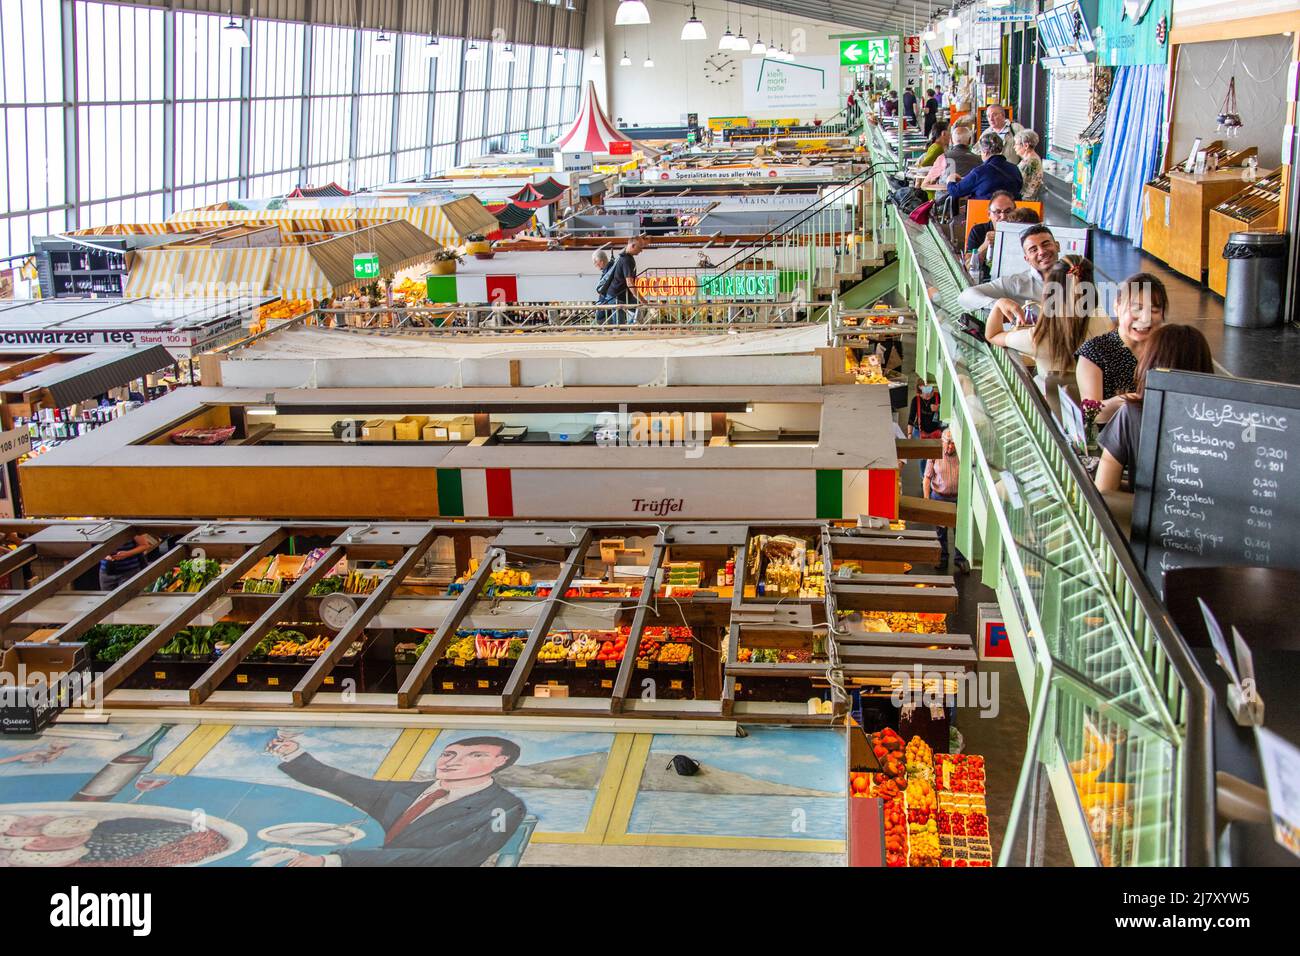 Kleinmarkthalle, indoor market, Frankfurt, Germany Stock Photo